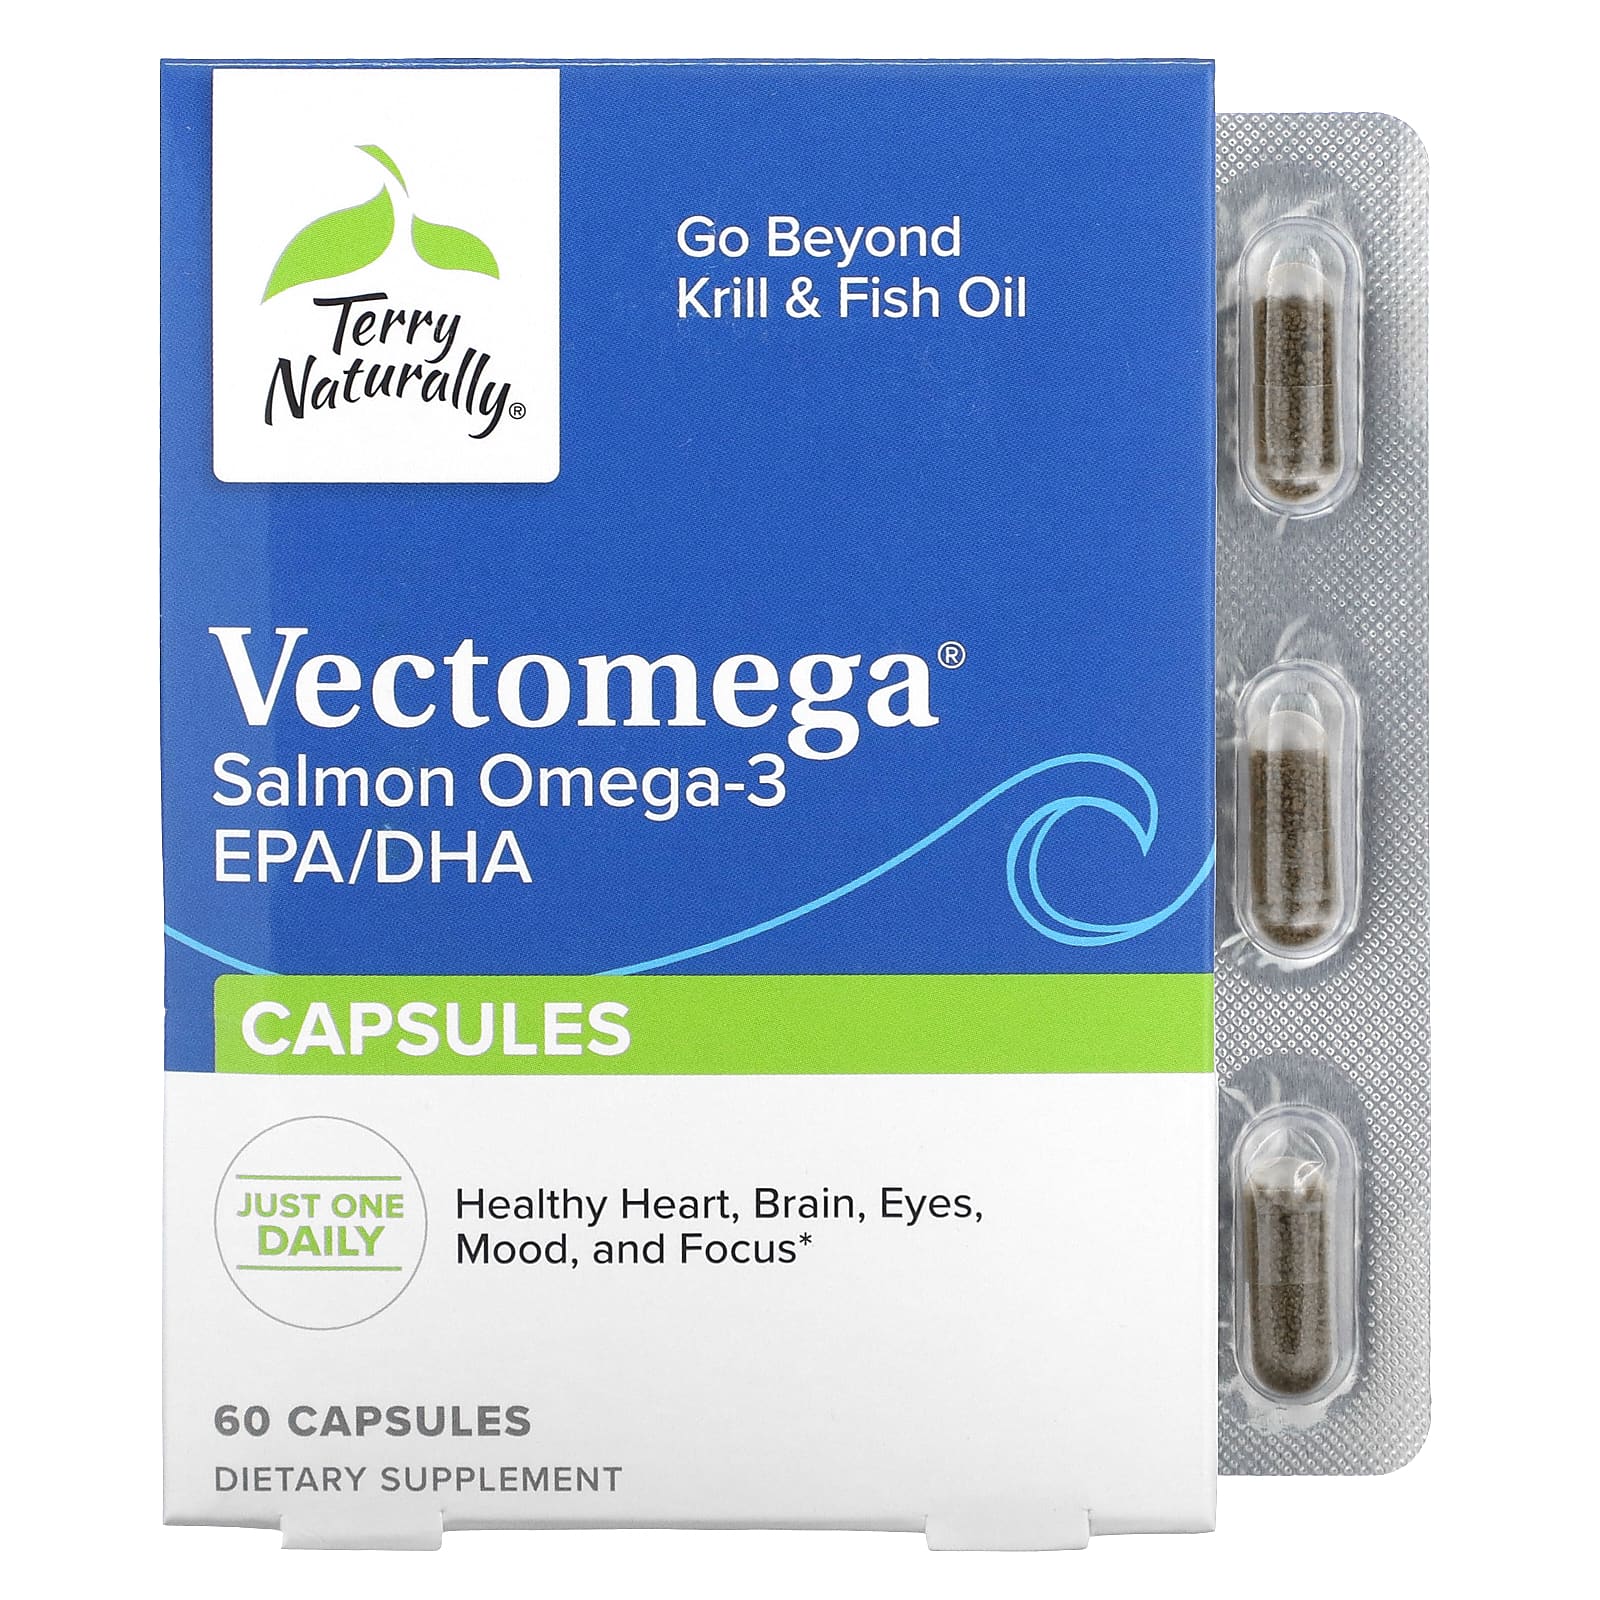 Terry Naturally Vectomega Salmon Omega-3 EPA/DHA 60 Capsules цена и фото